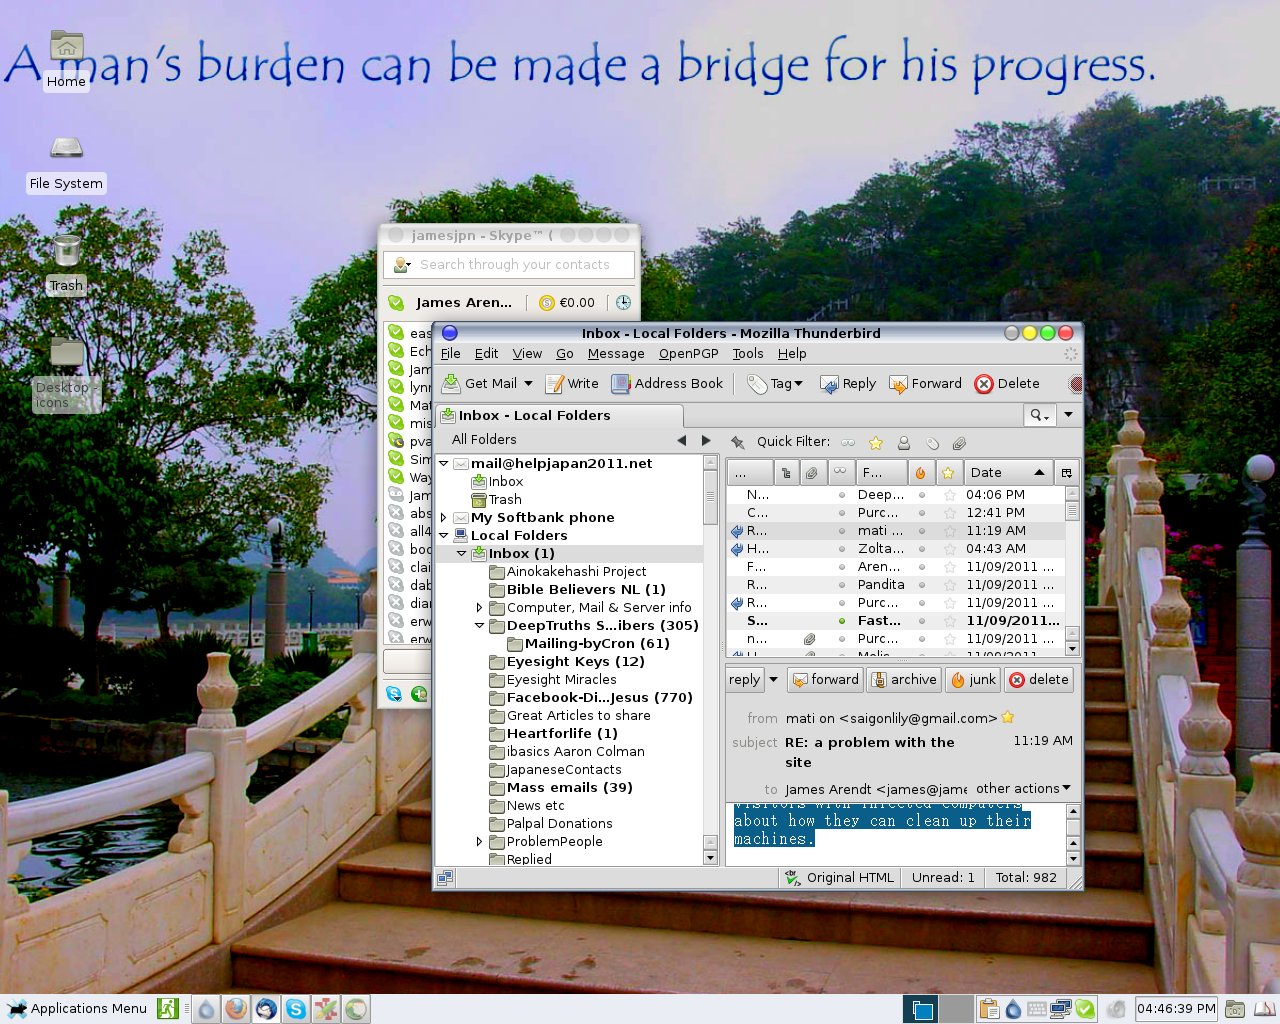 Fedora 16 Screenshots